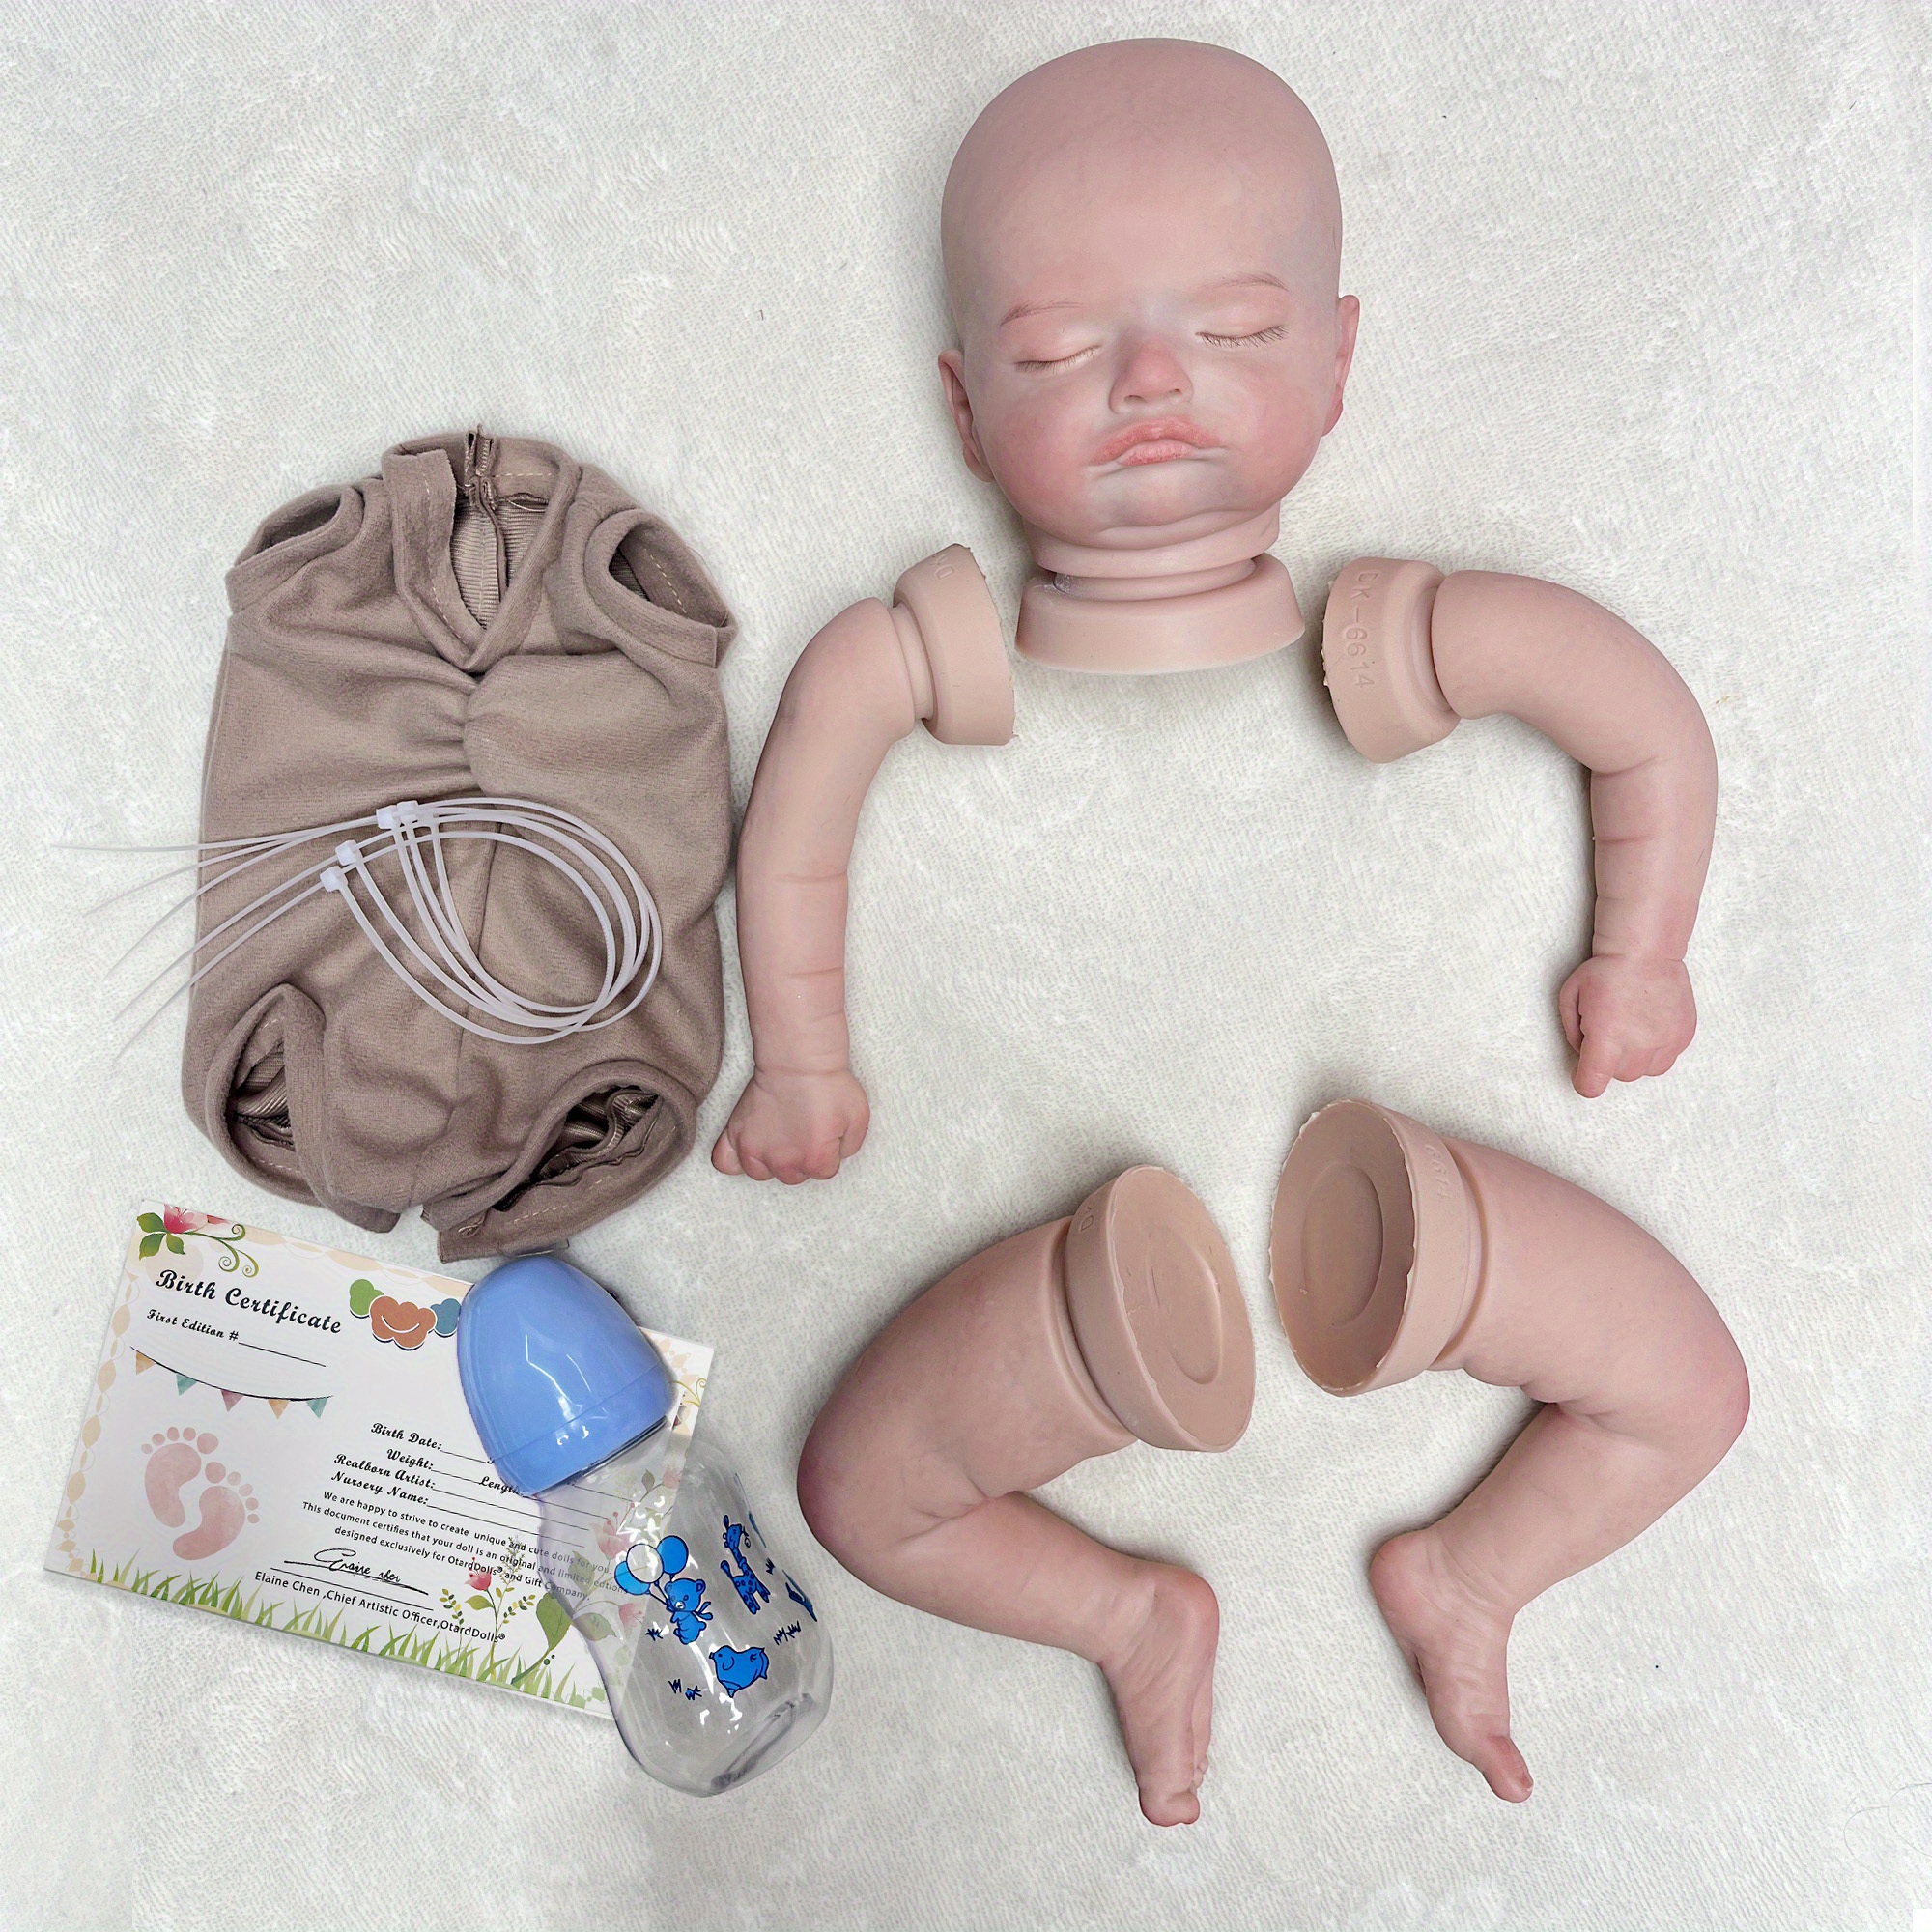 Miaio 22 Inches 56cm Bebe Reborn Baby Dolls Realistic Newborn Soft Full  Vinyl Silicone Body Surprice Gift Toy For Children